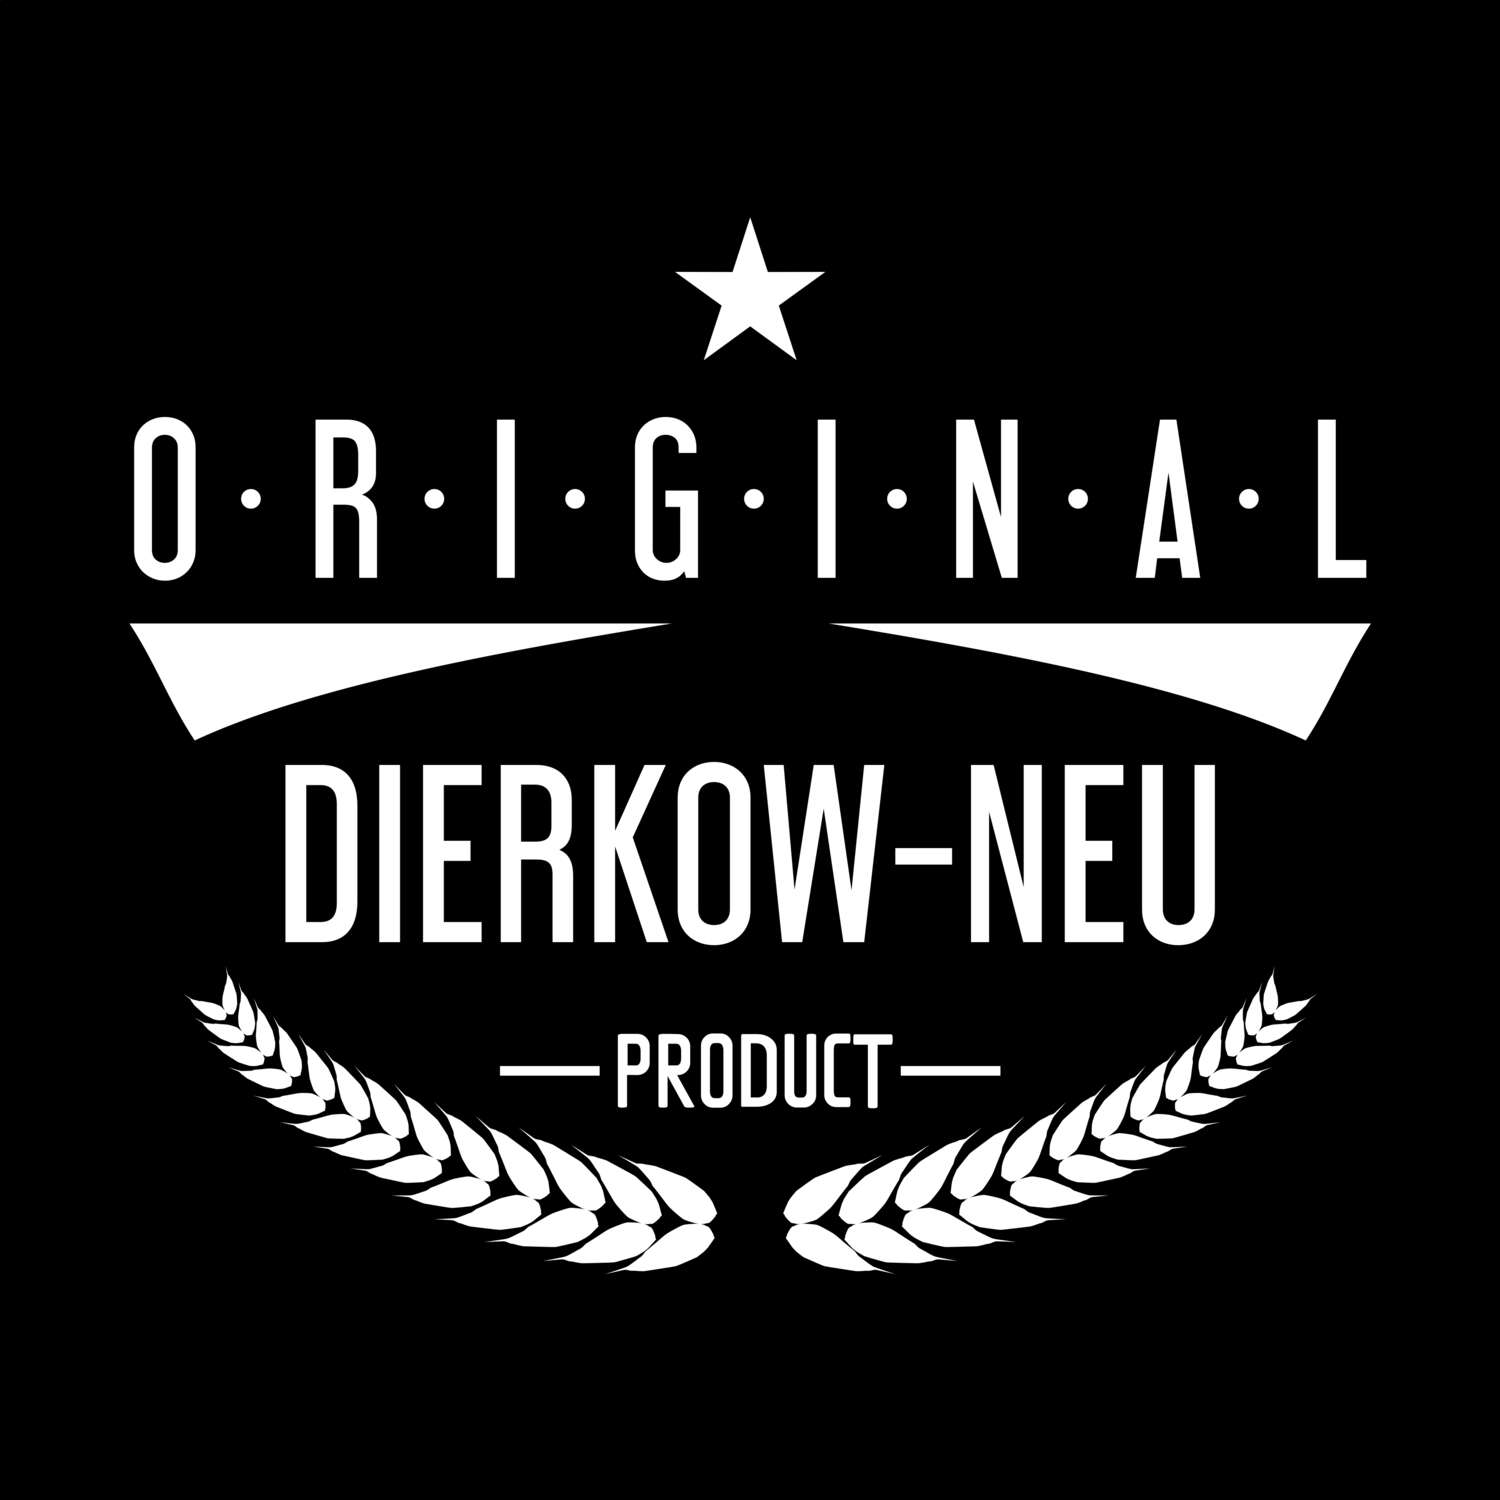 Dierkow-Neu T-Shirt »Original Product«